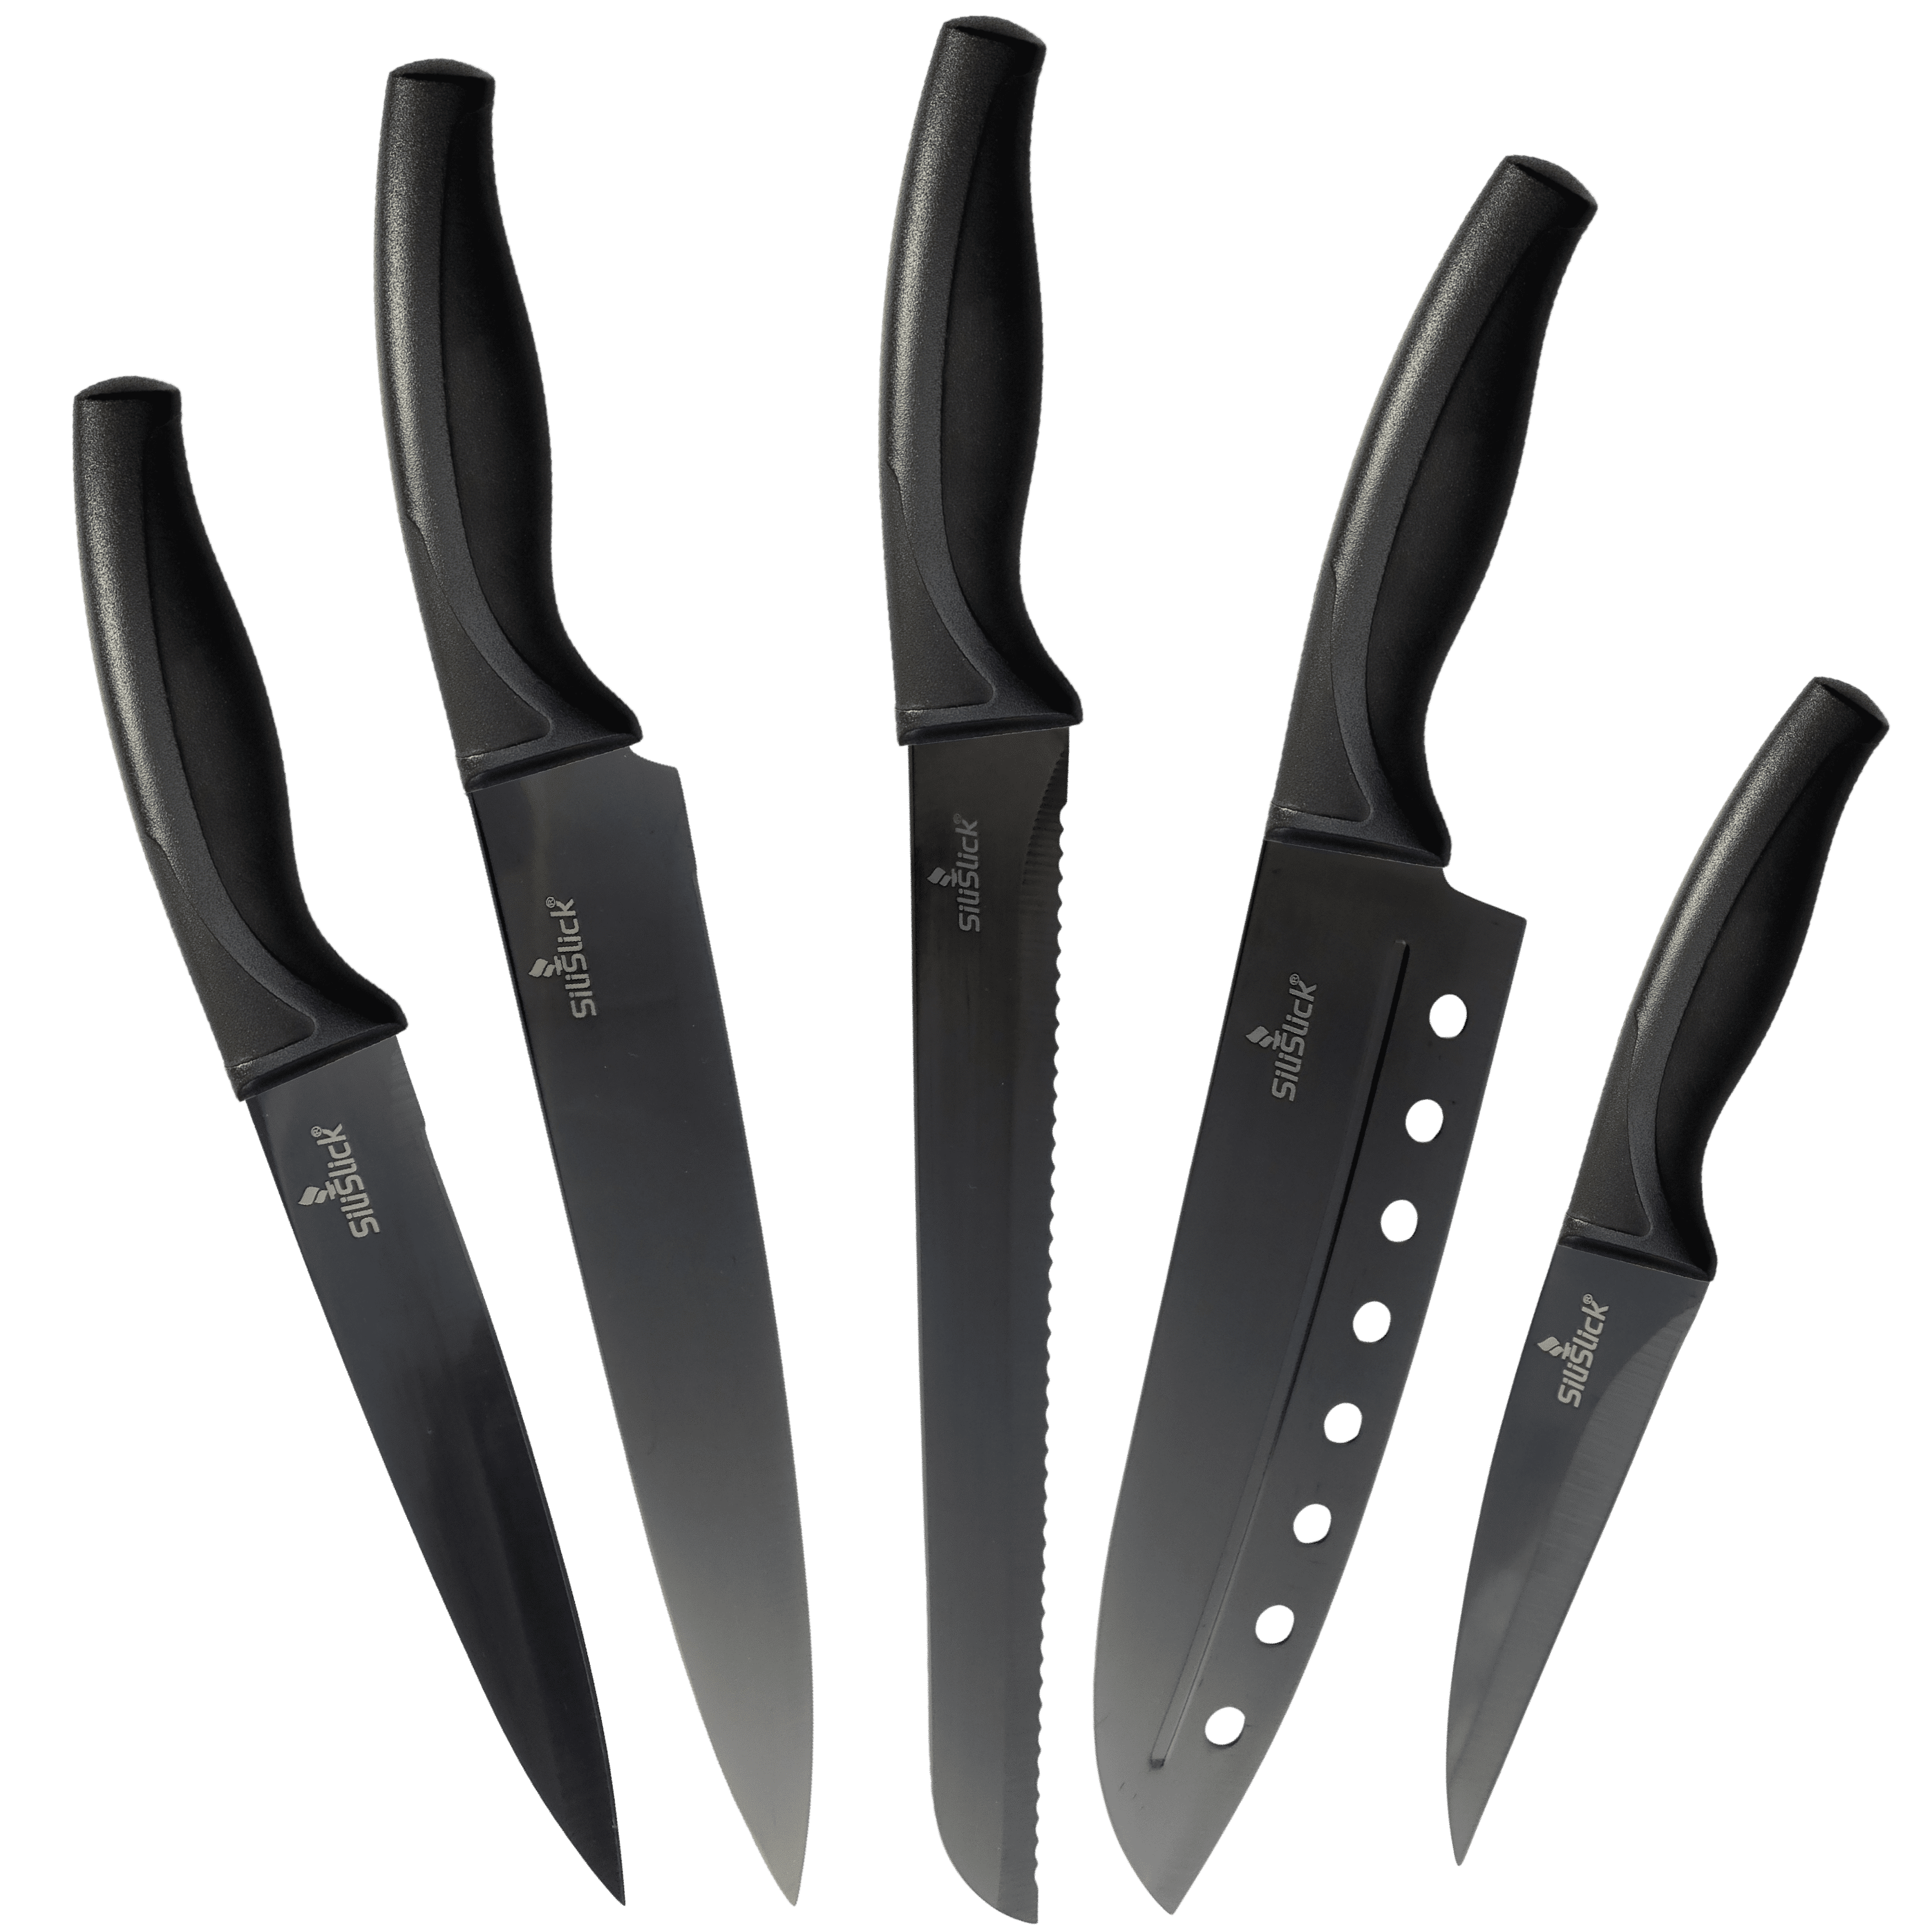 SiliSlick 6 Piece Blue Steak Knife Set - Iridescent Stainless Steel Blades  – SiliSlick®